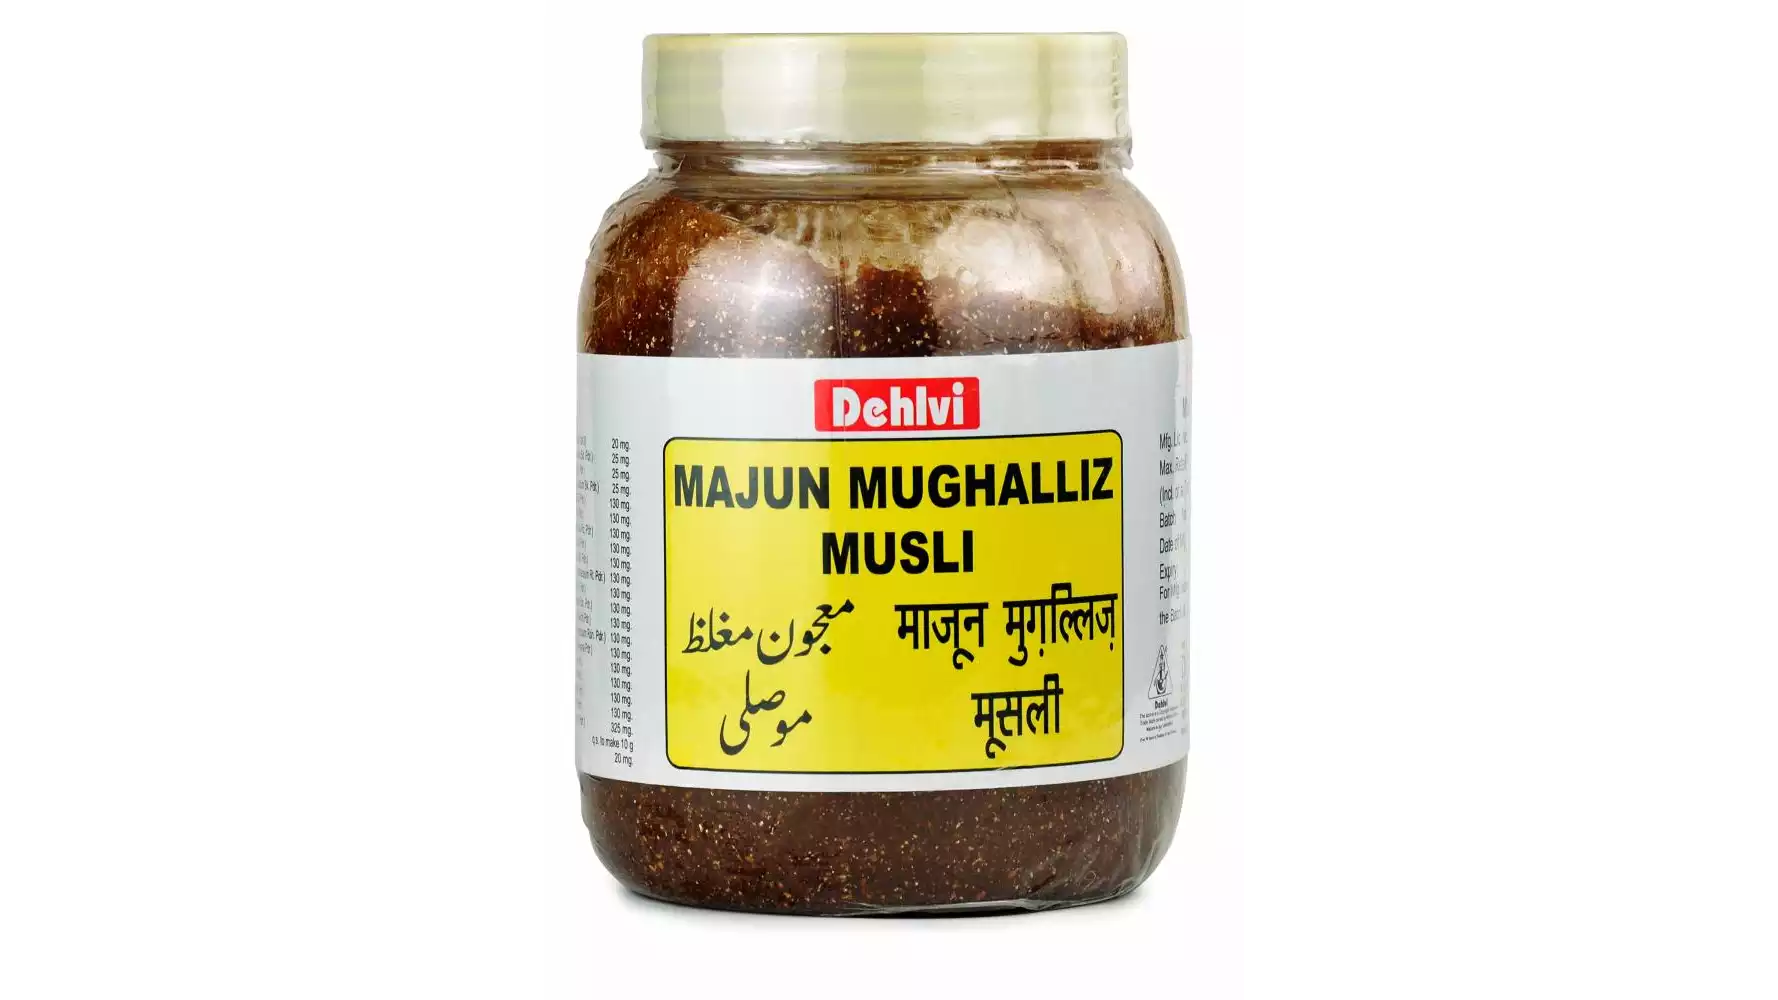 Dehlvi Mughalliz Musli (500g)